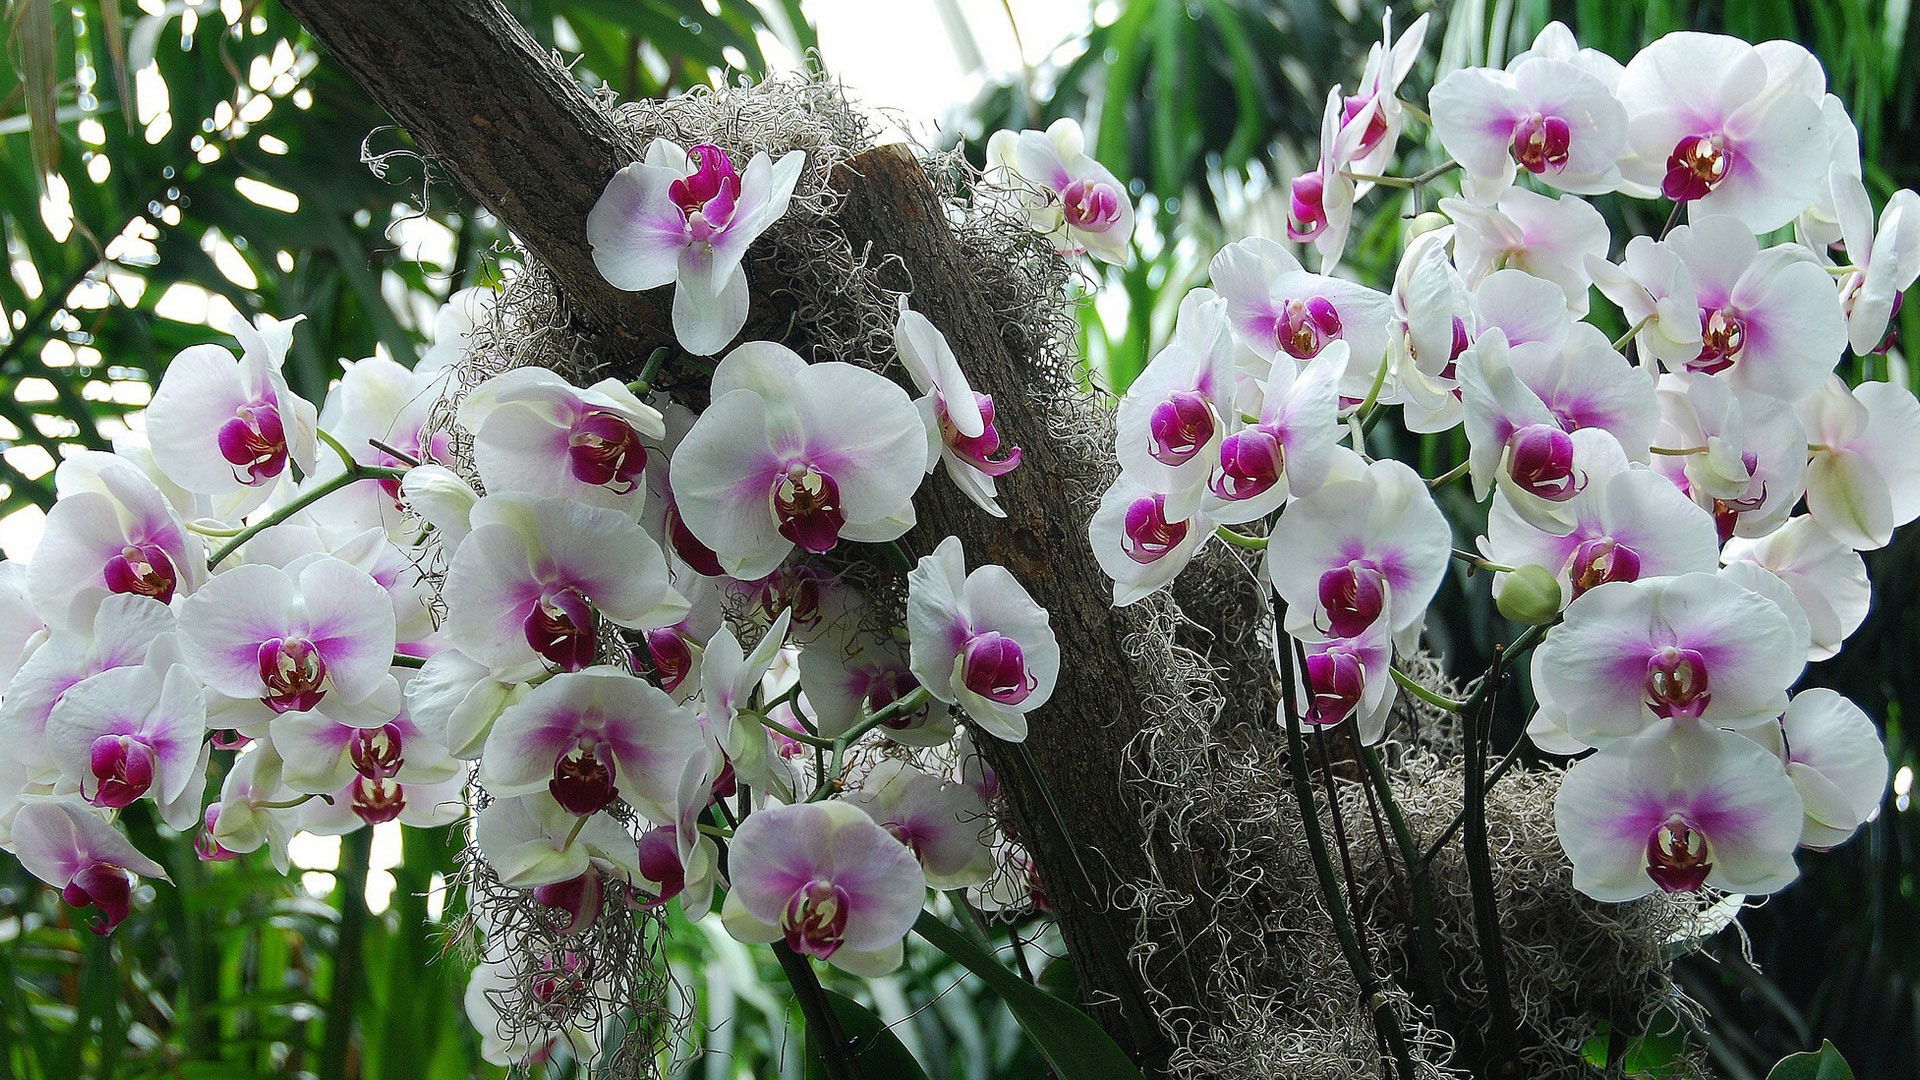 orhideya_falenopsis_v_prirlde_1552150620_5c83f05c6efbb.jpg